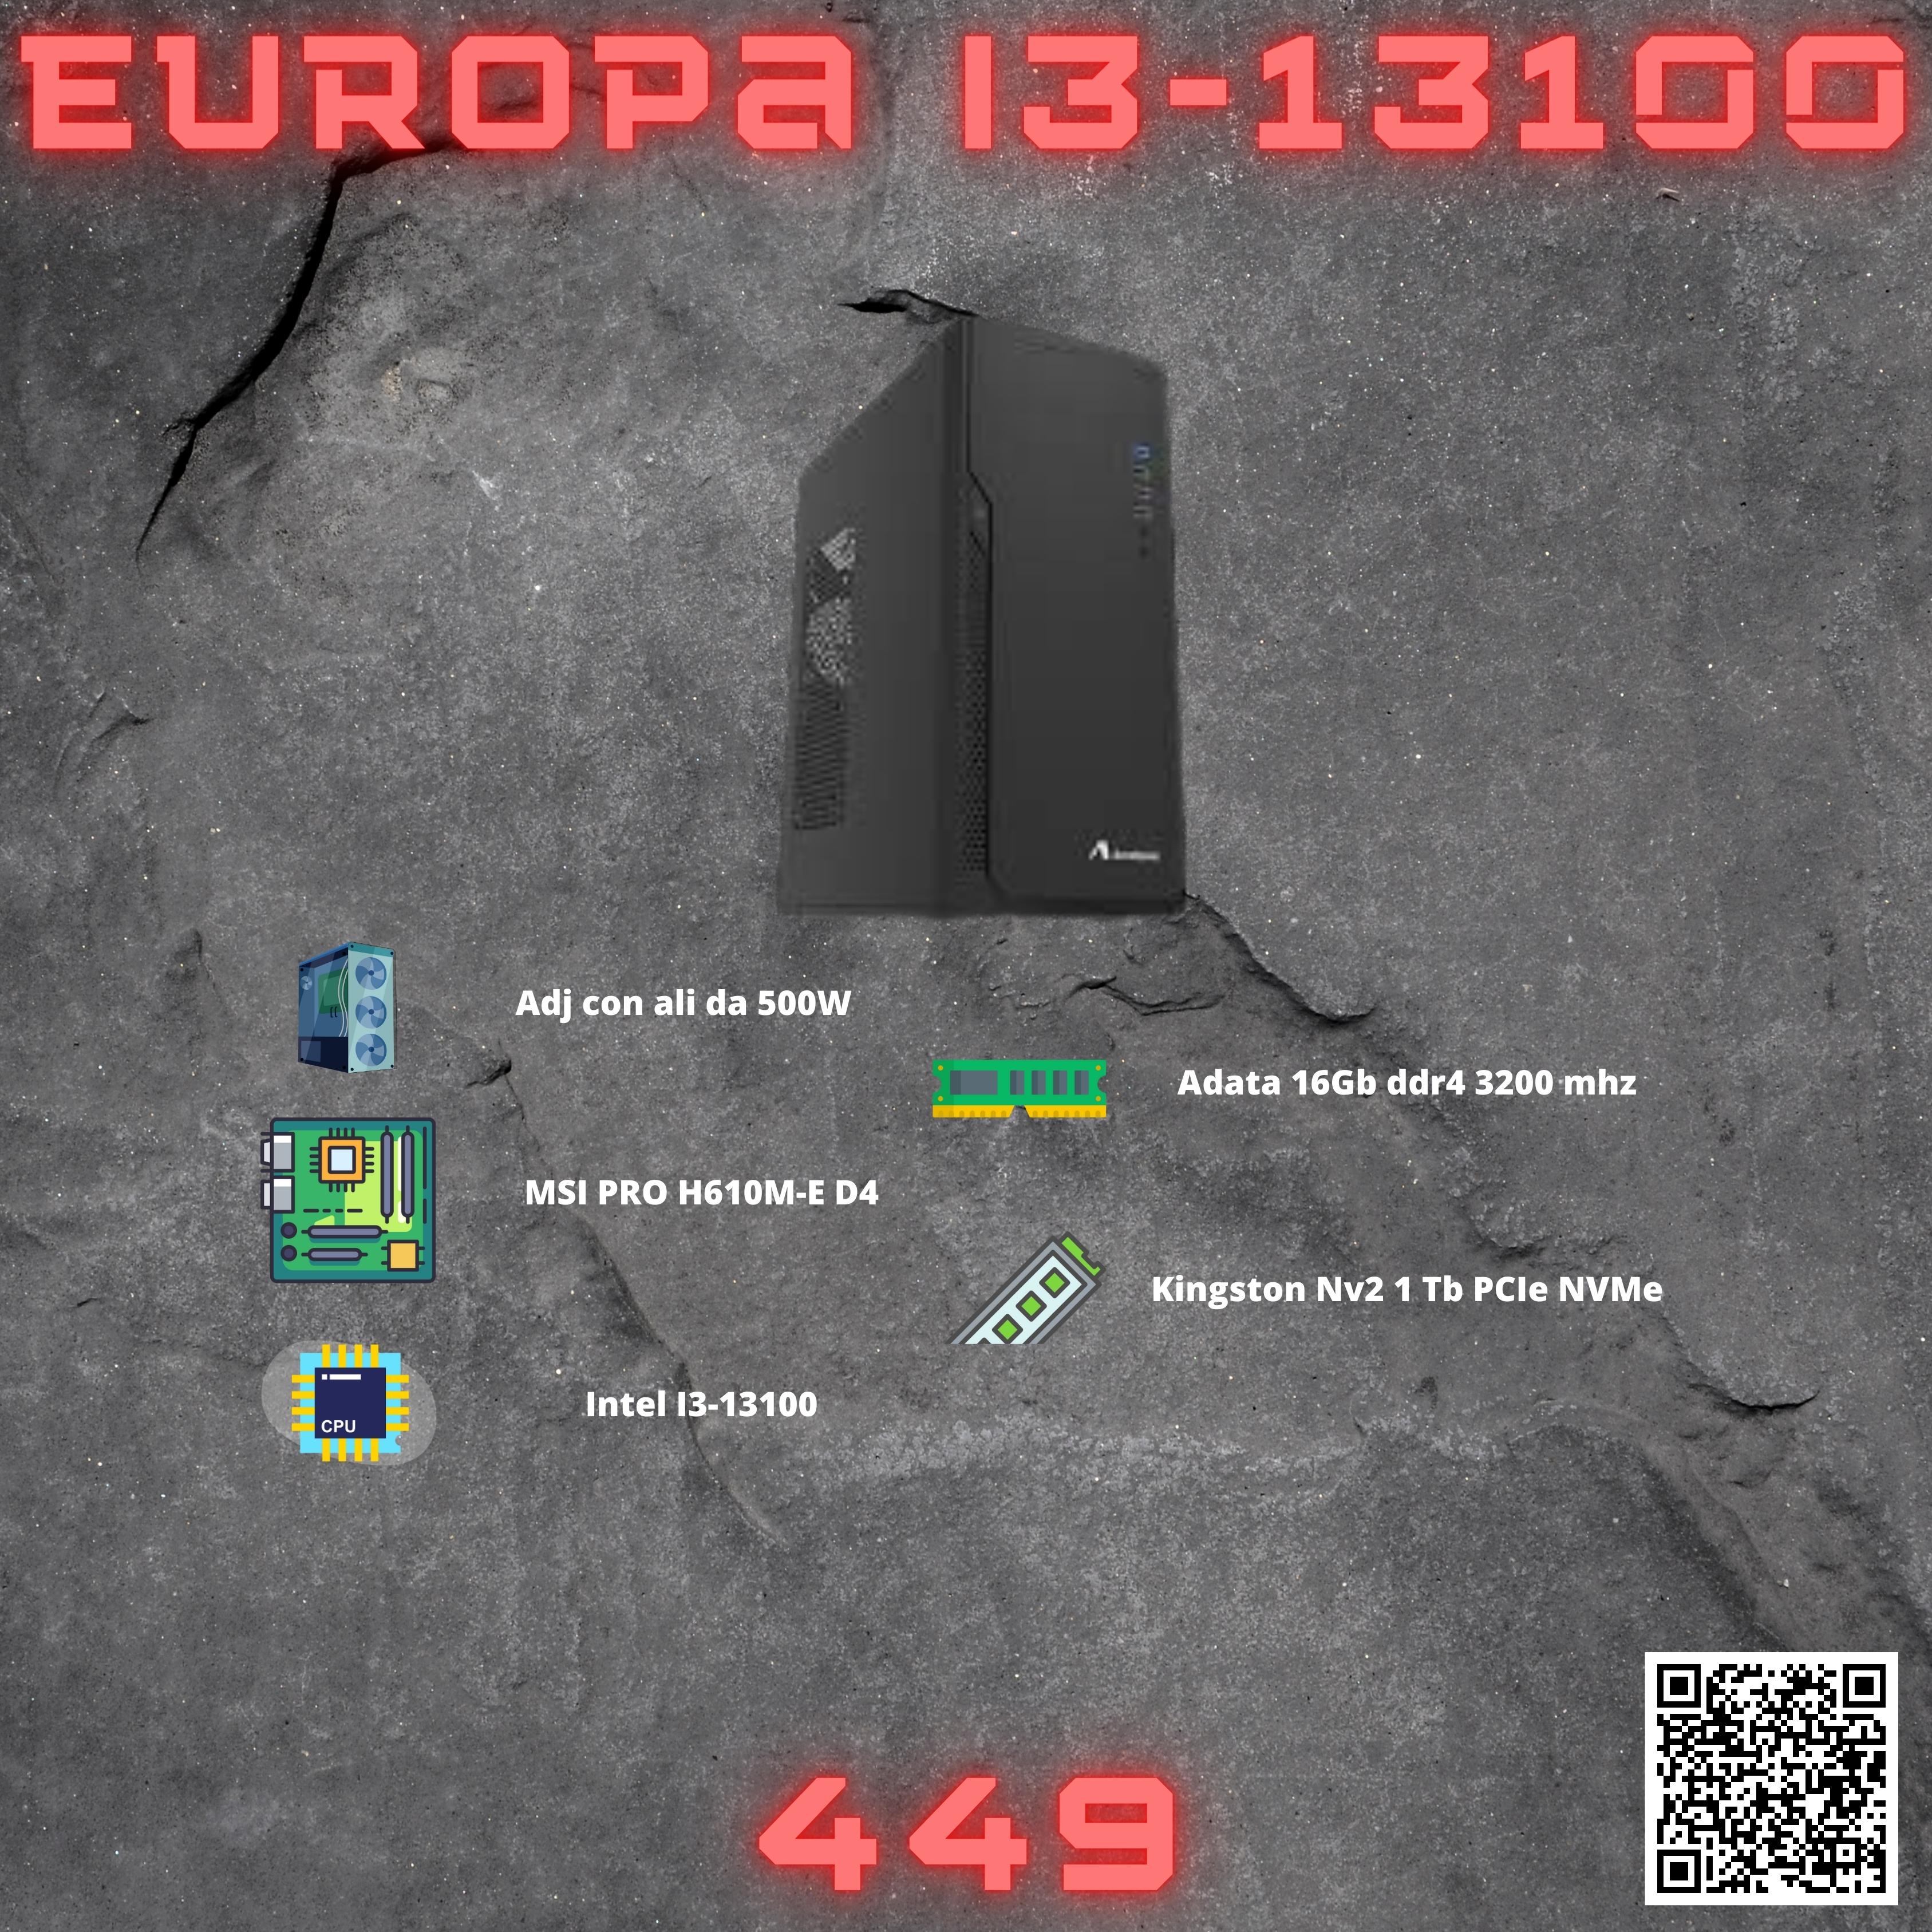 Europa I3-13100